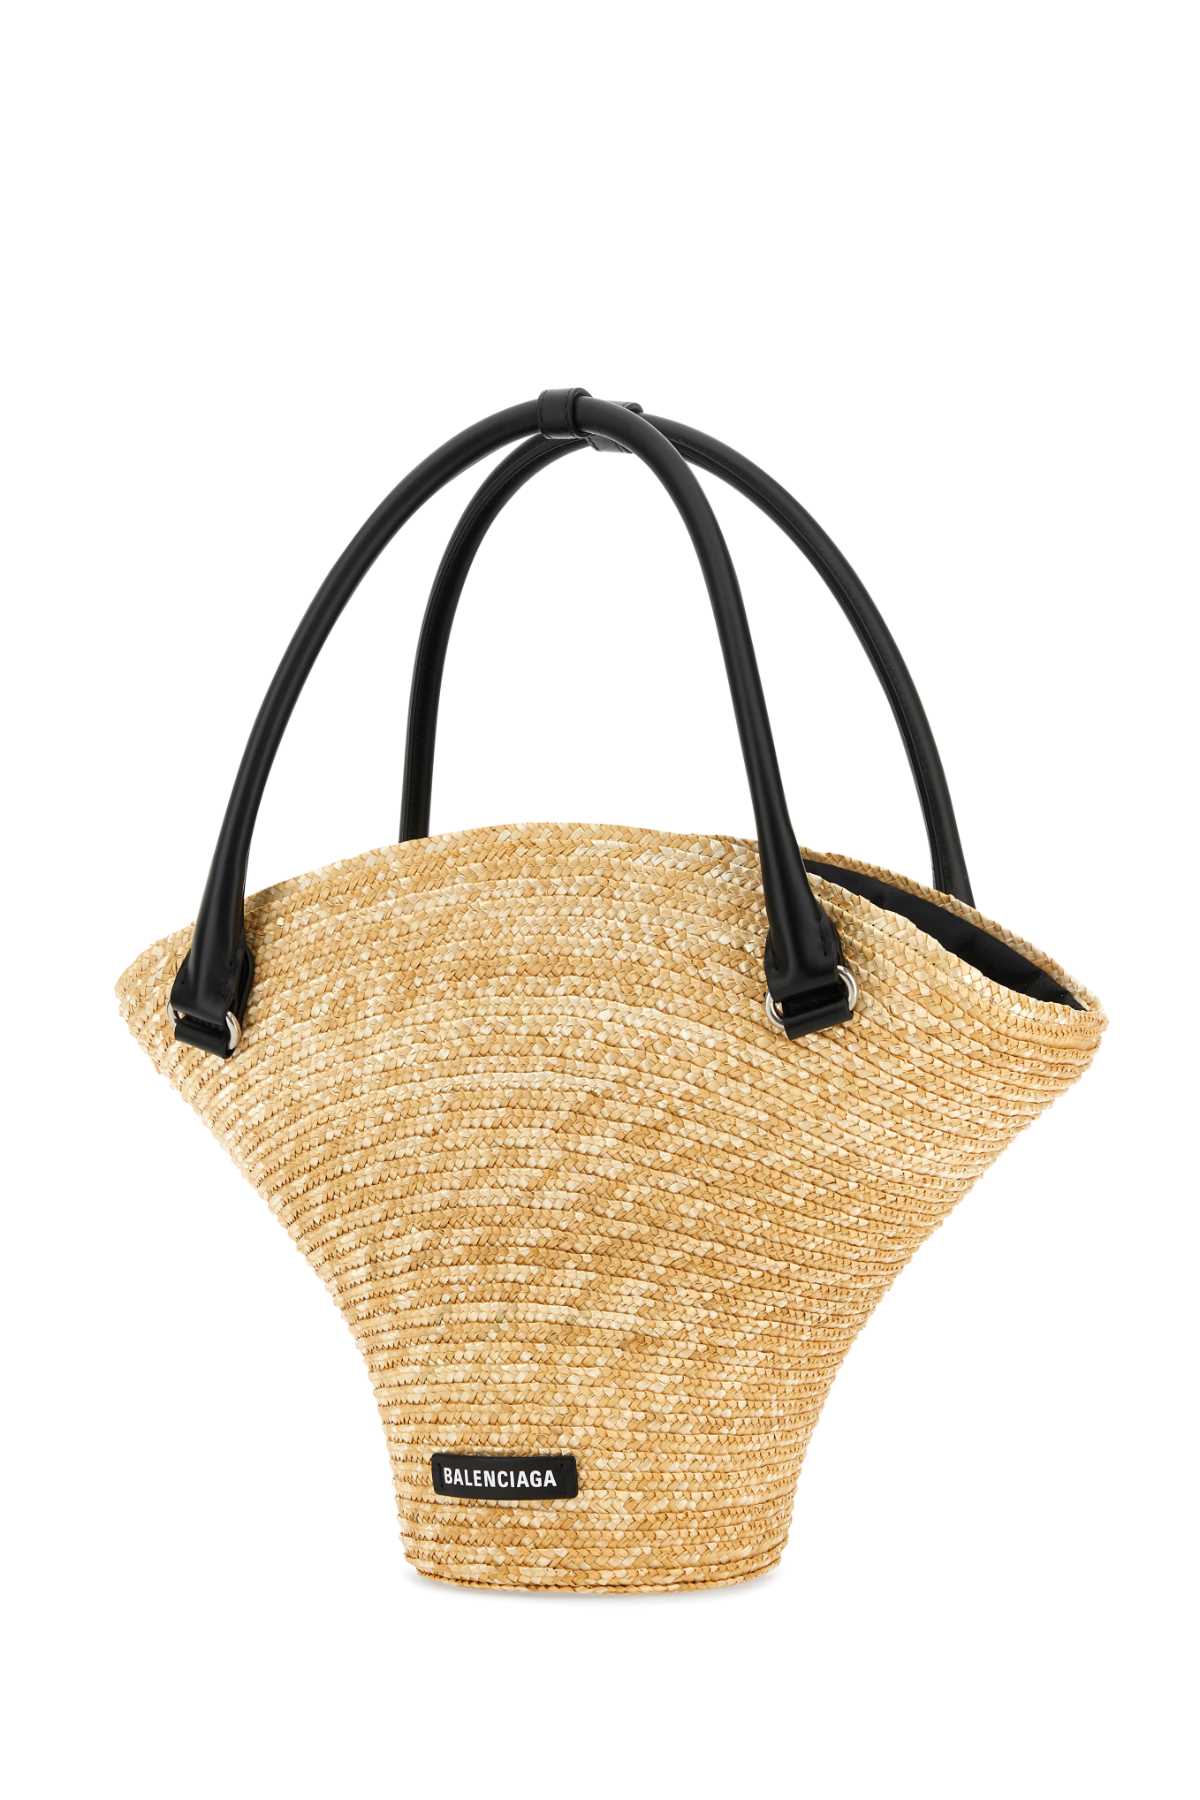 Balenciaga Straw Medium Beach Handbag In 9560